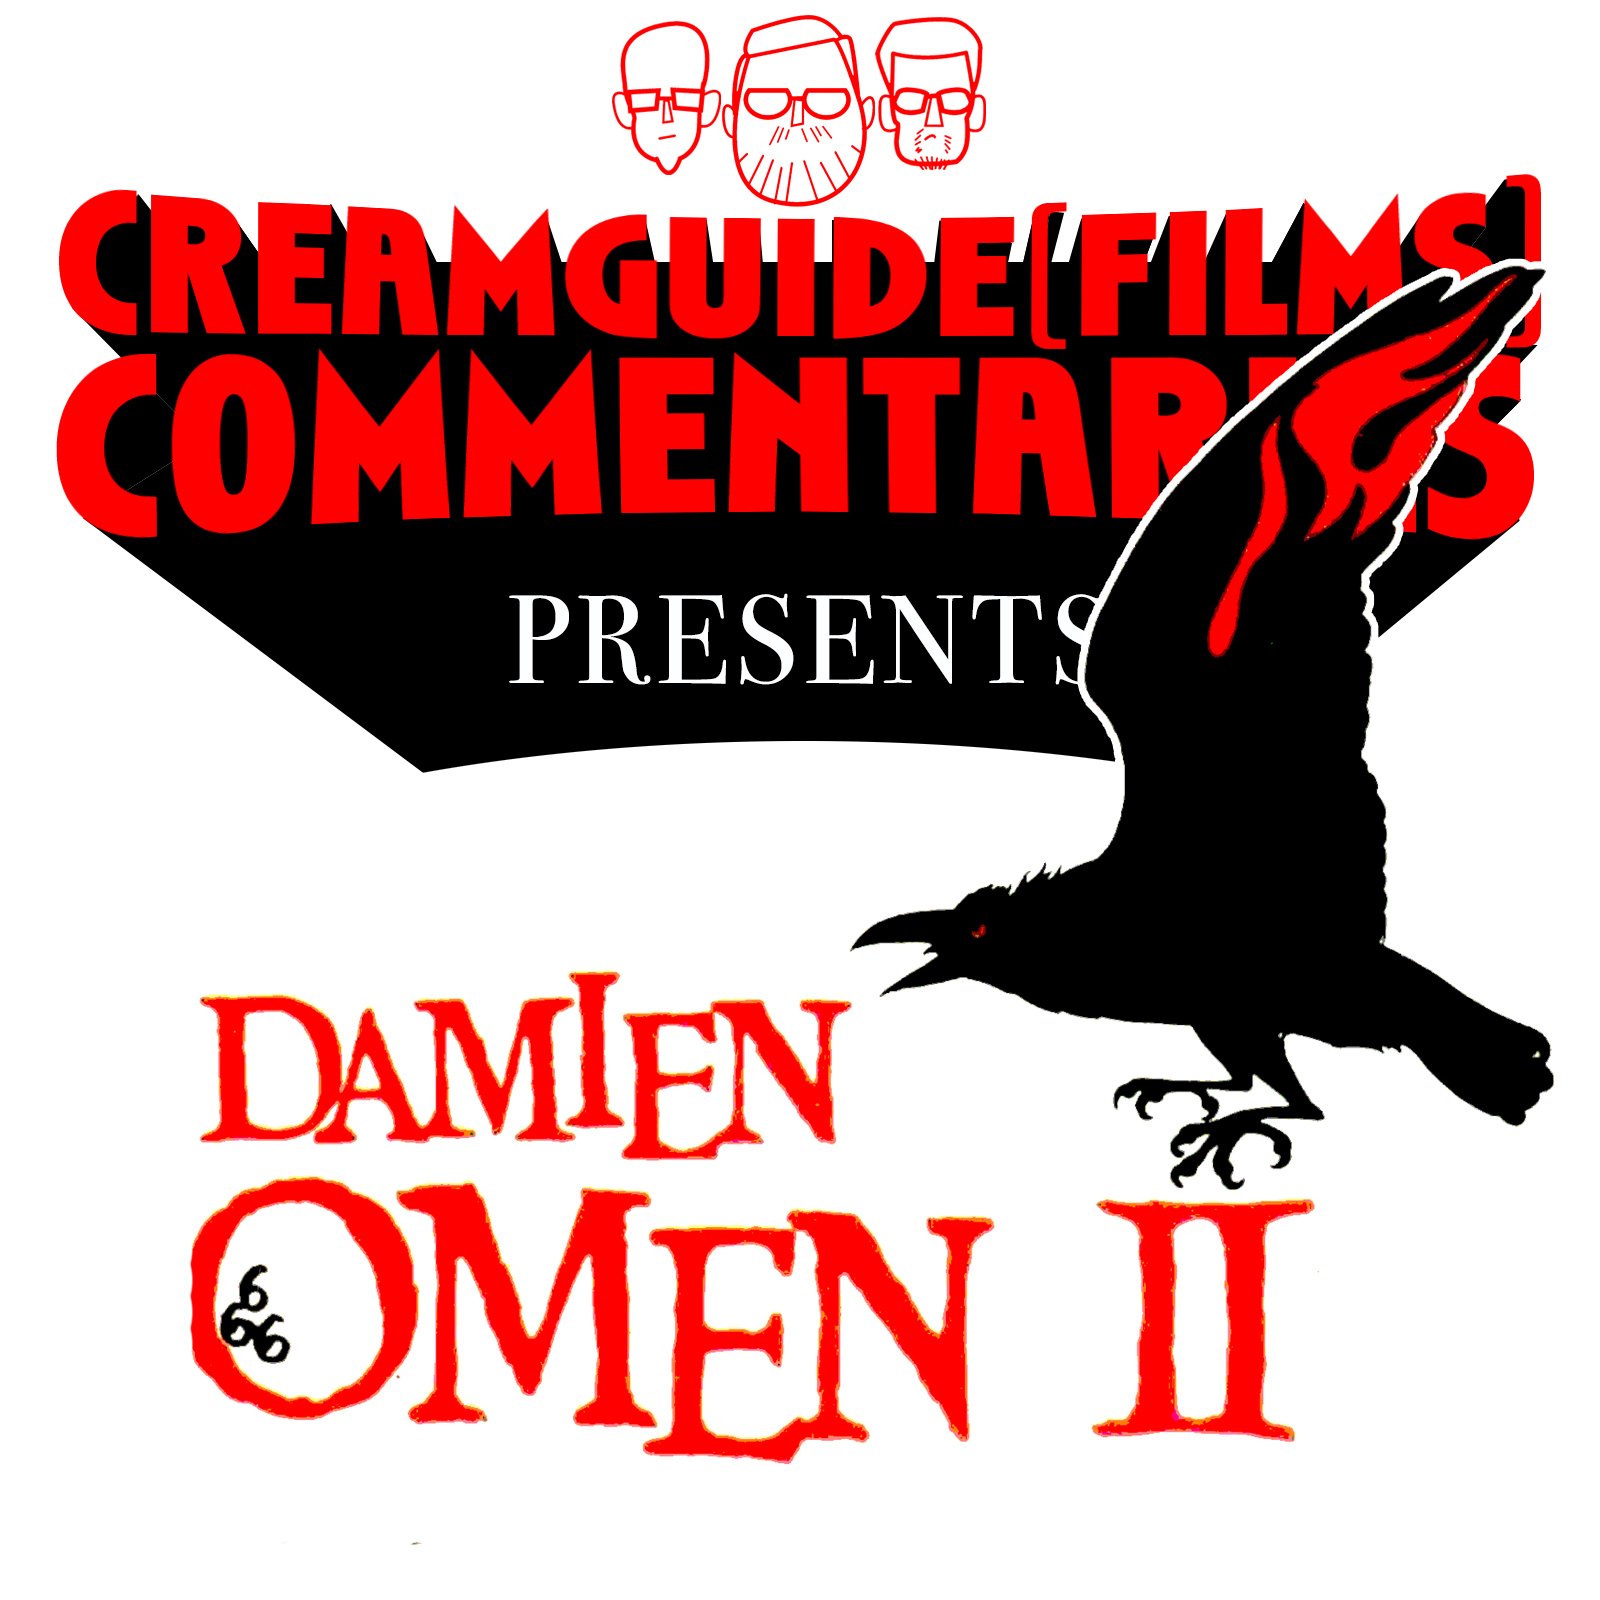 Creamguide(Films) Commentaries: Damien Omen II